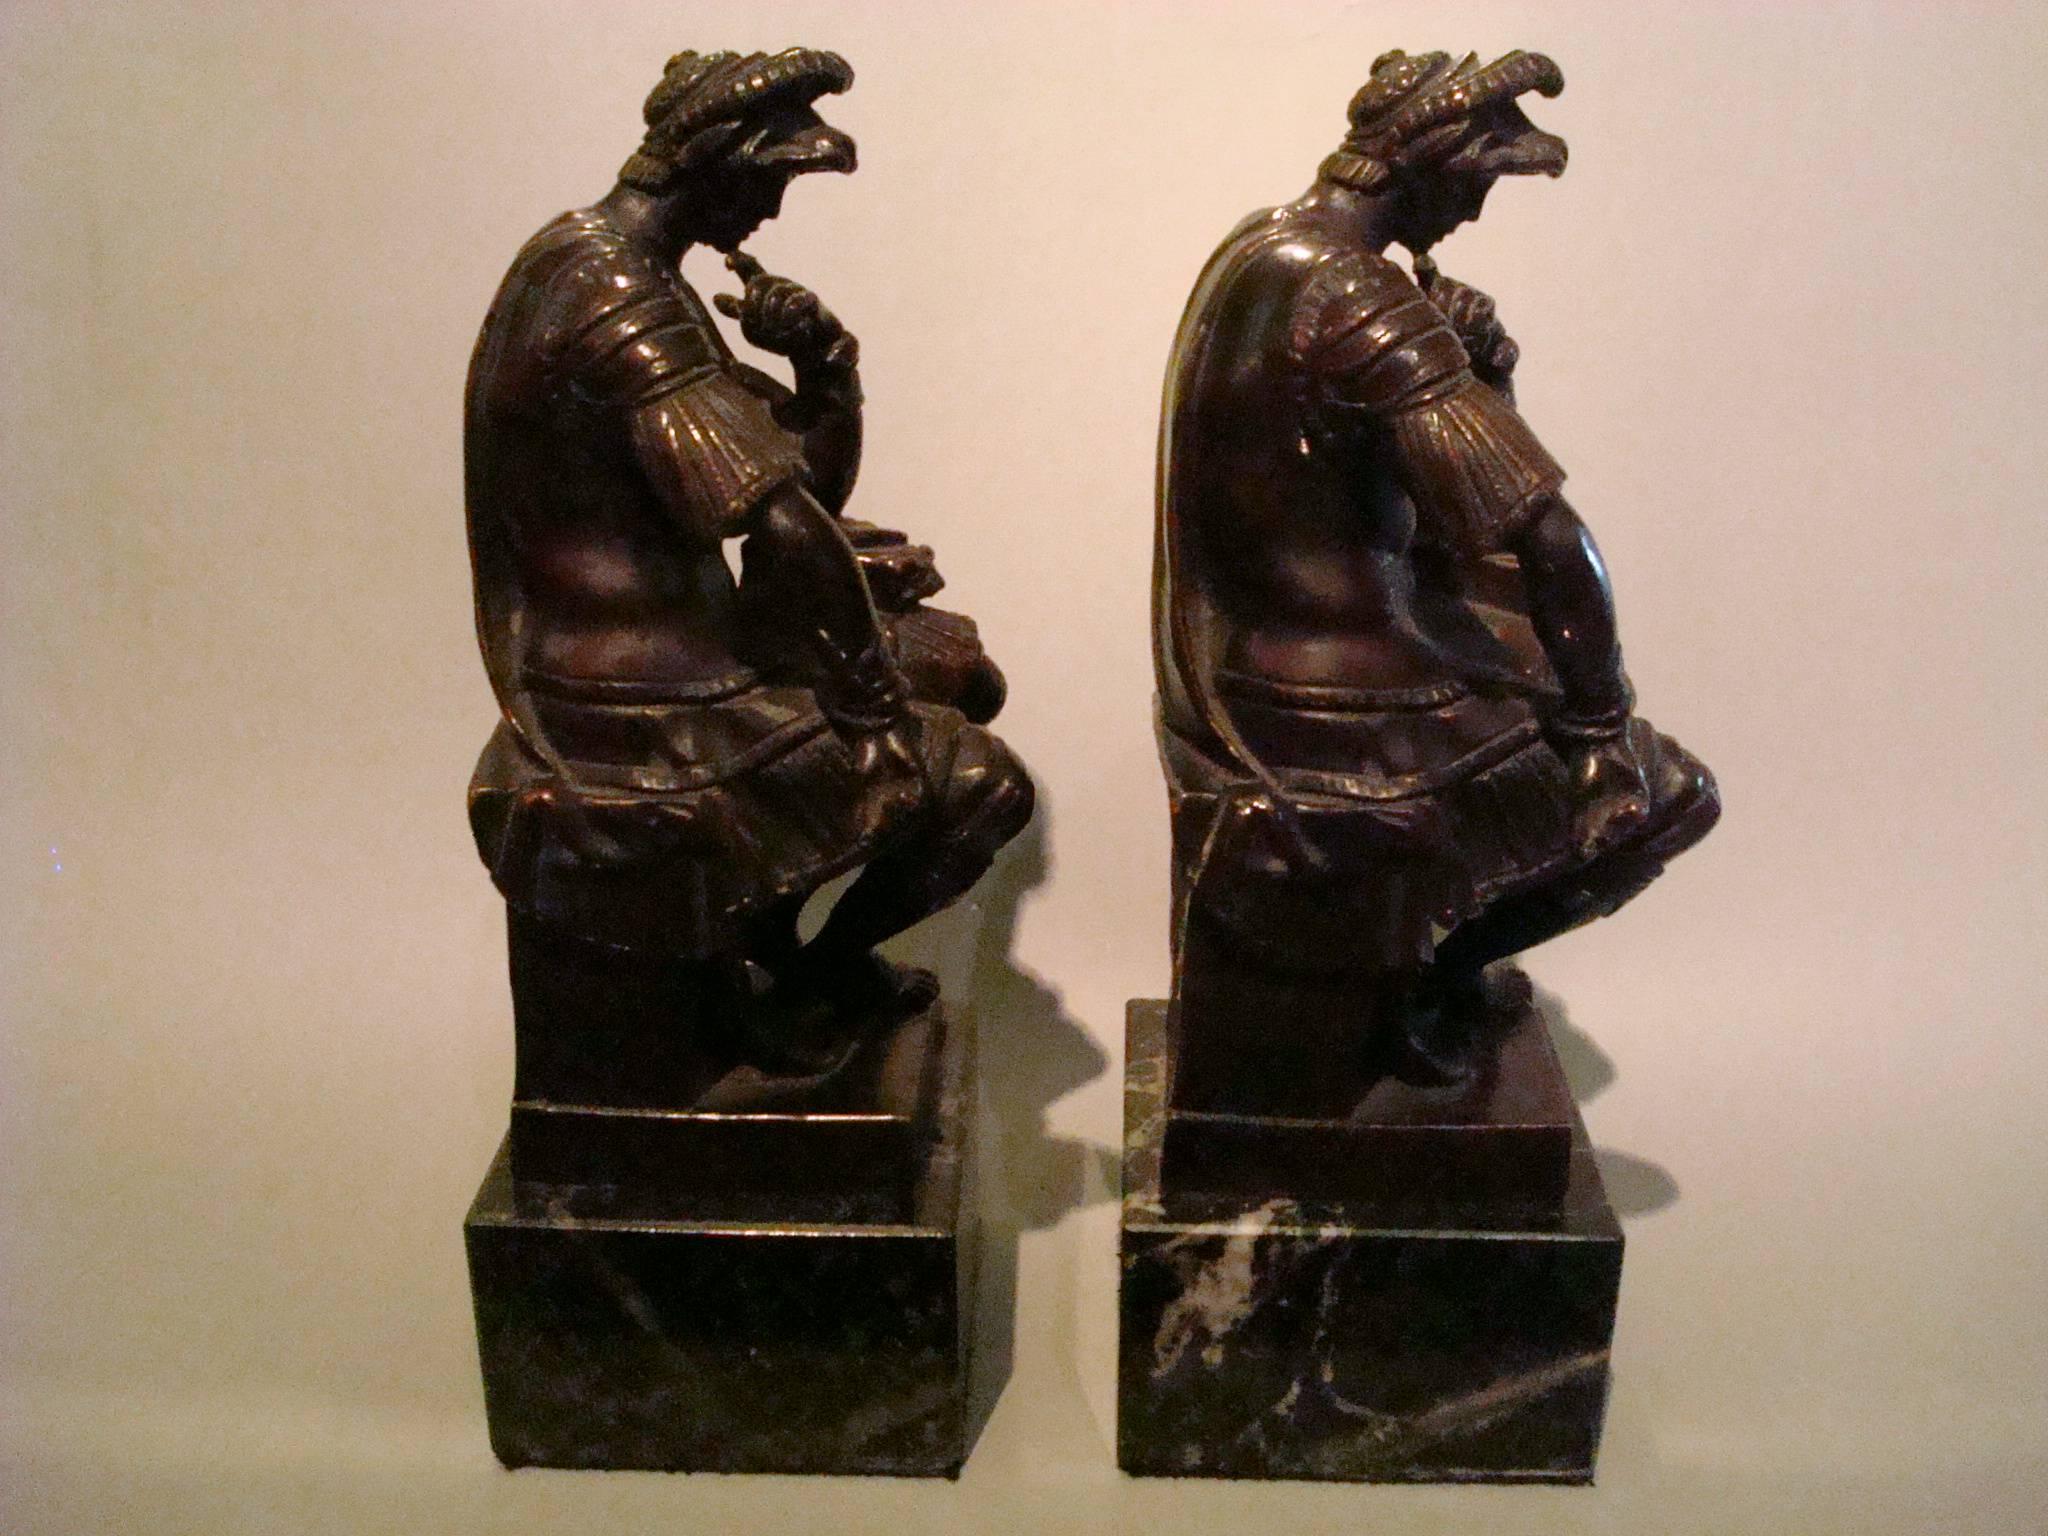 Italian Thinking Roman Bronze Sculpture Bookends after Michelangelo 